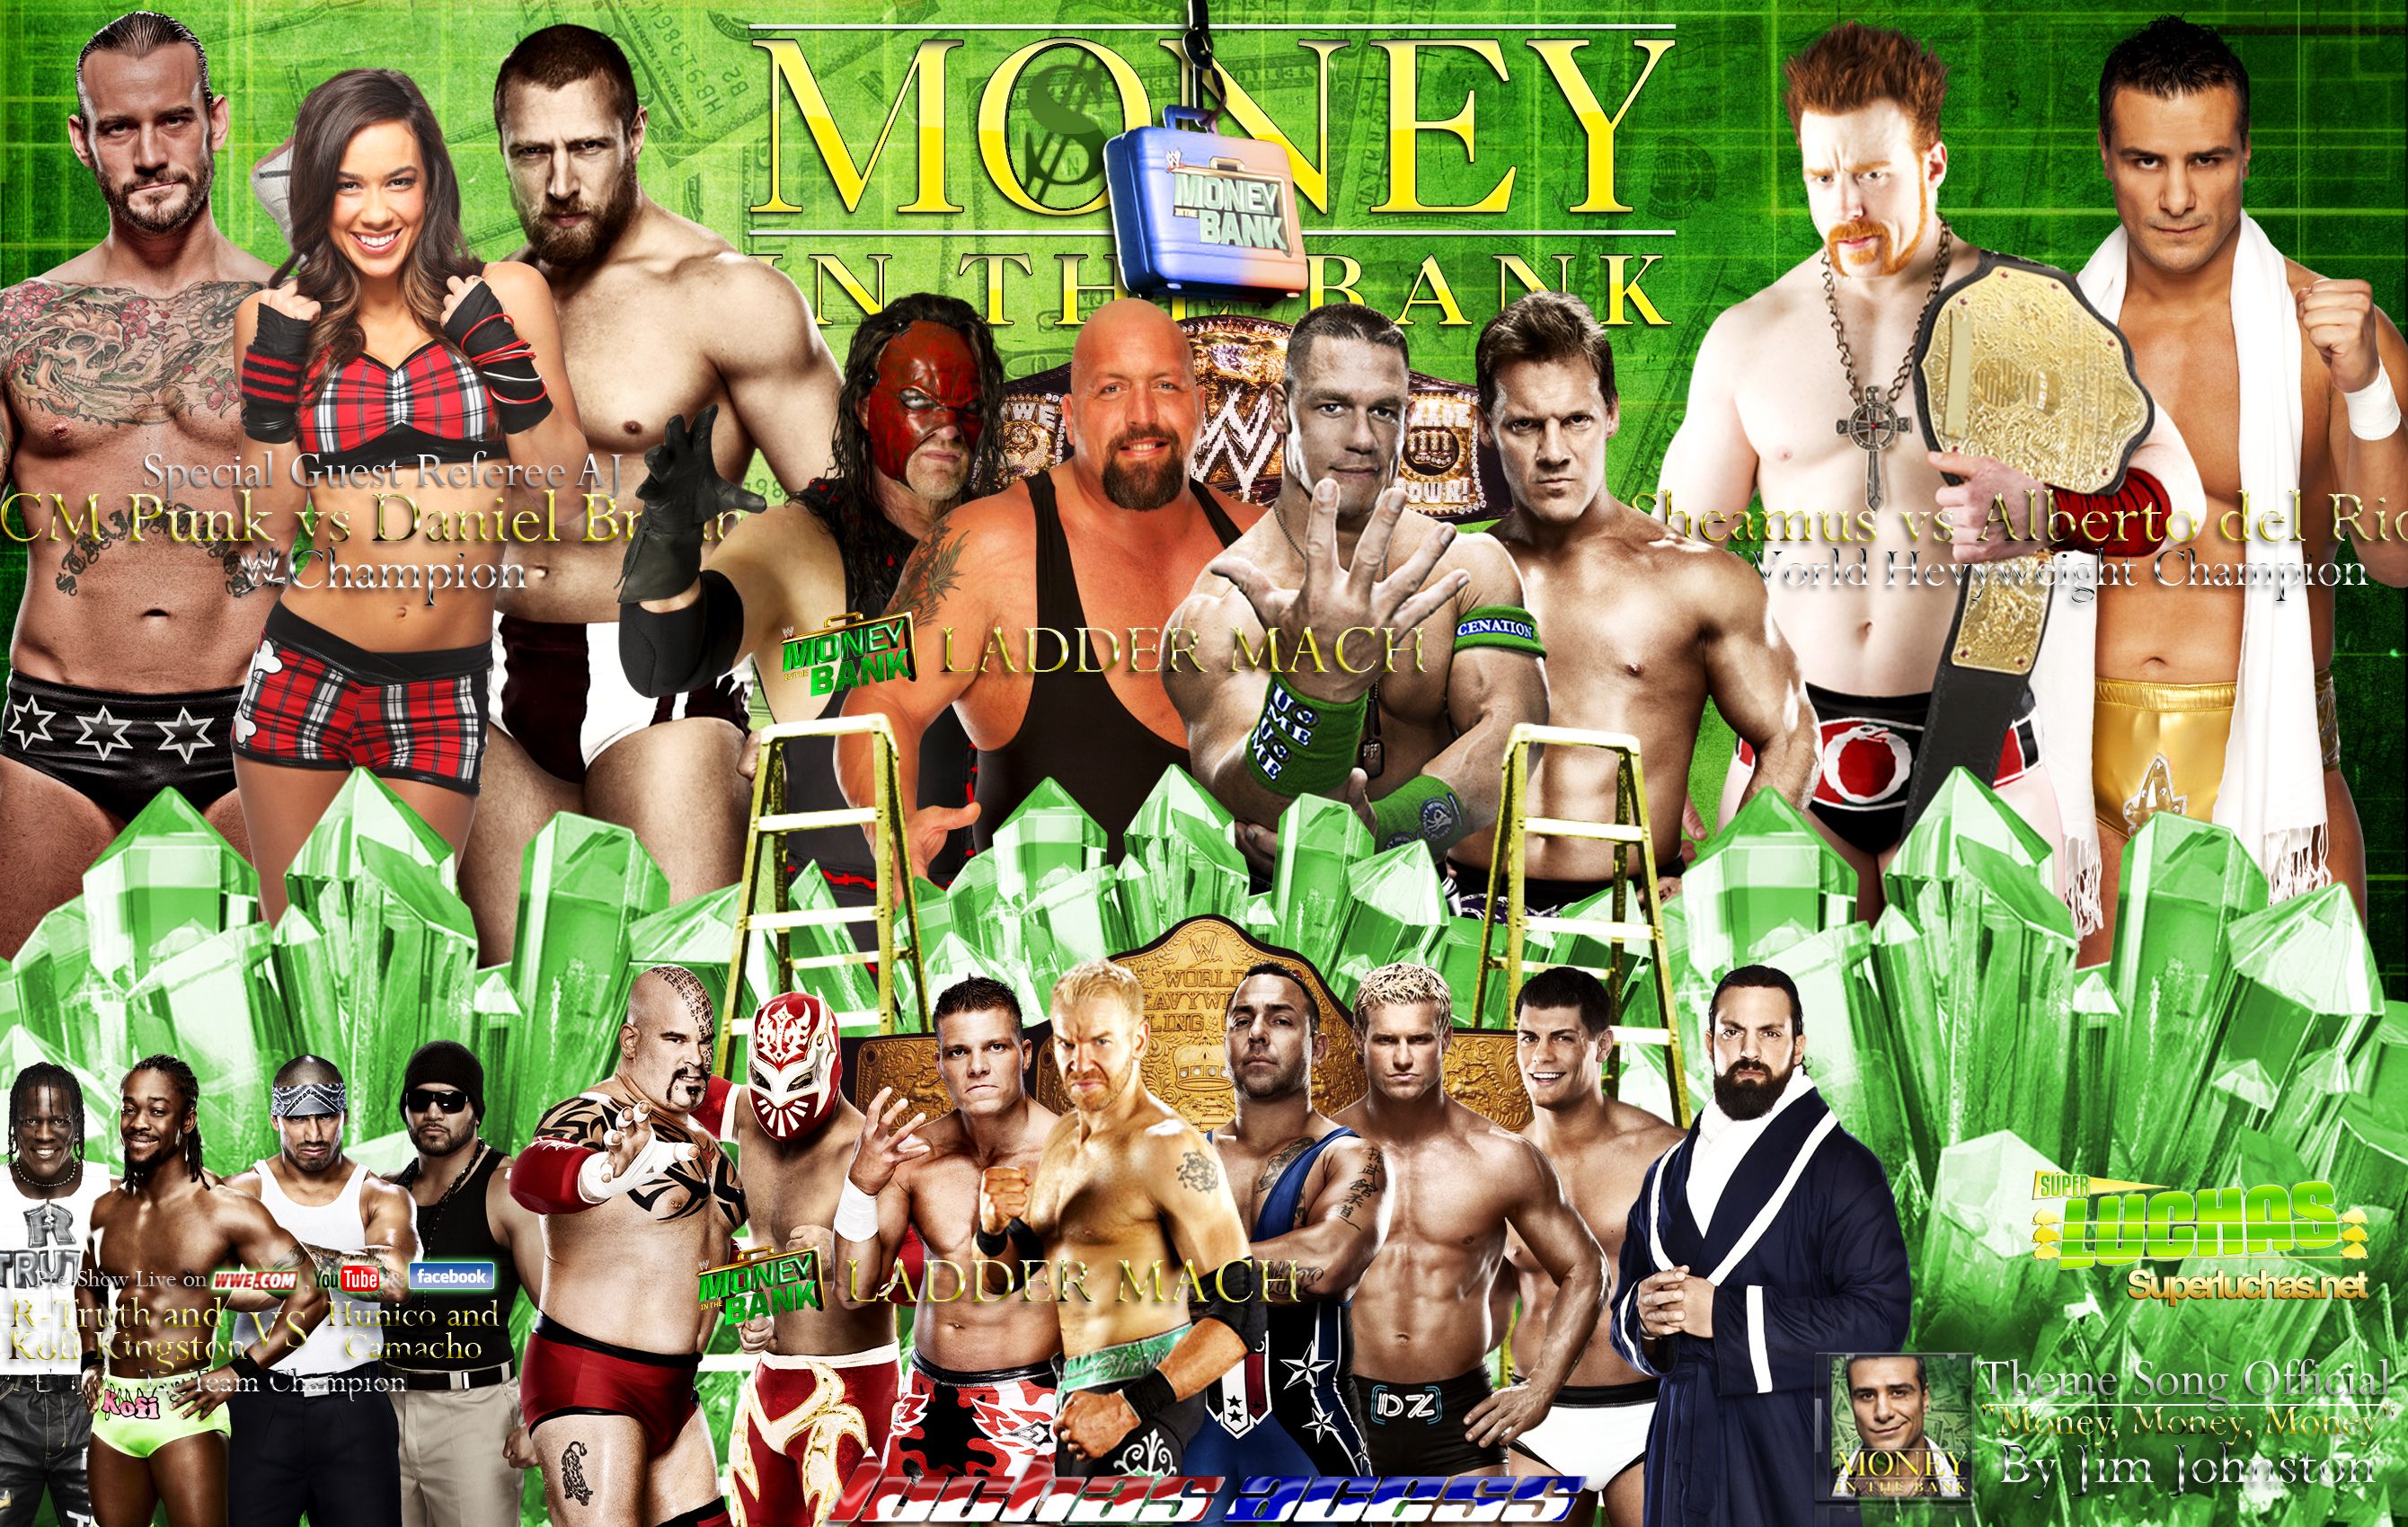 wee money in the bank. Wallpaper: Cartel del PPV WWE Money in